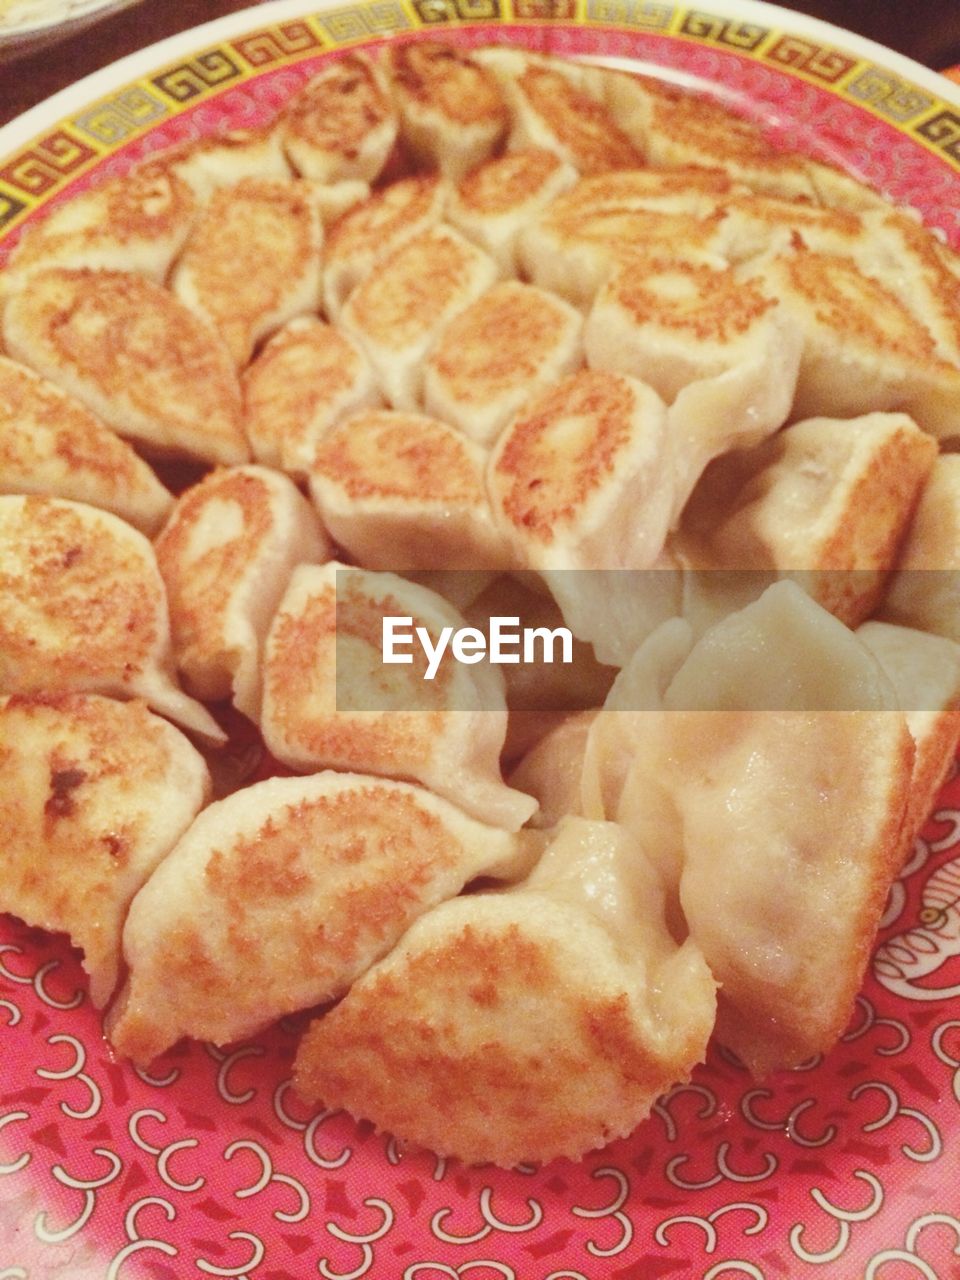 Close-up of dumplings on plate